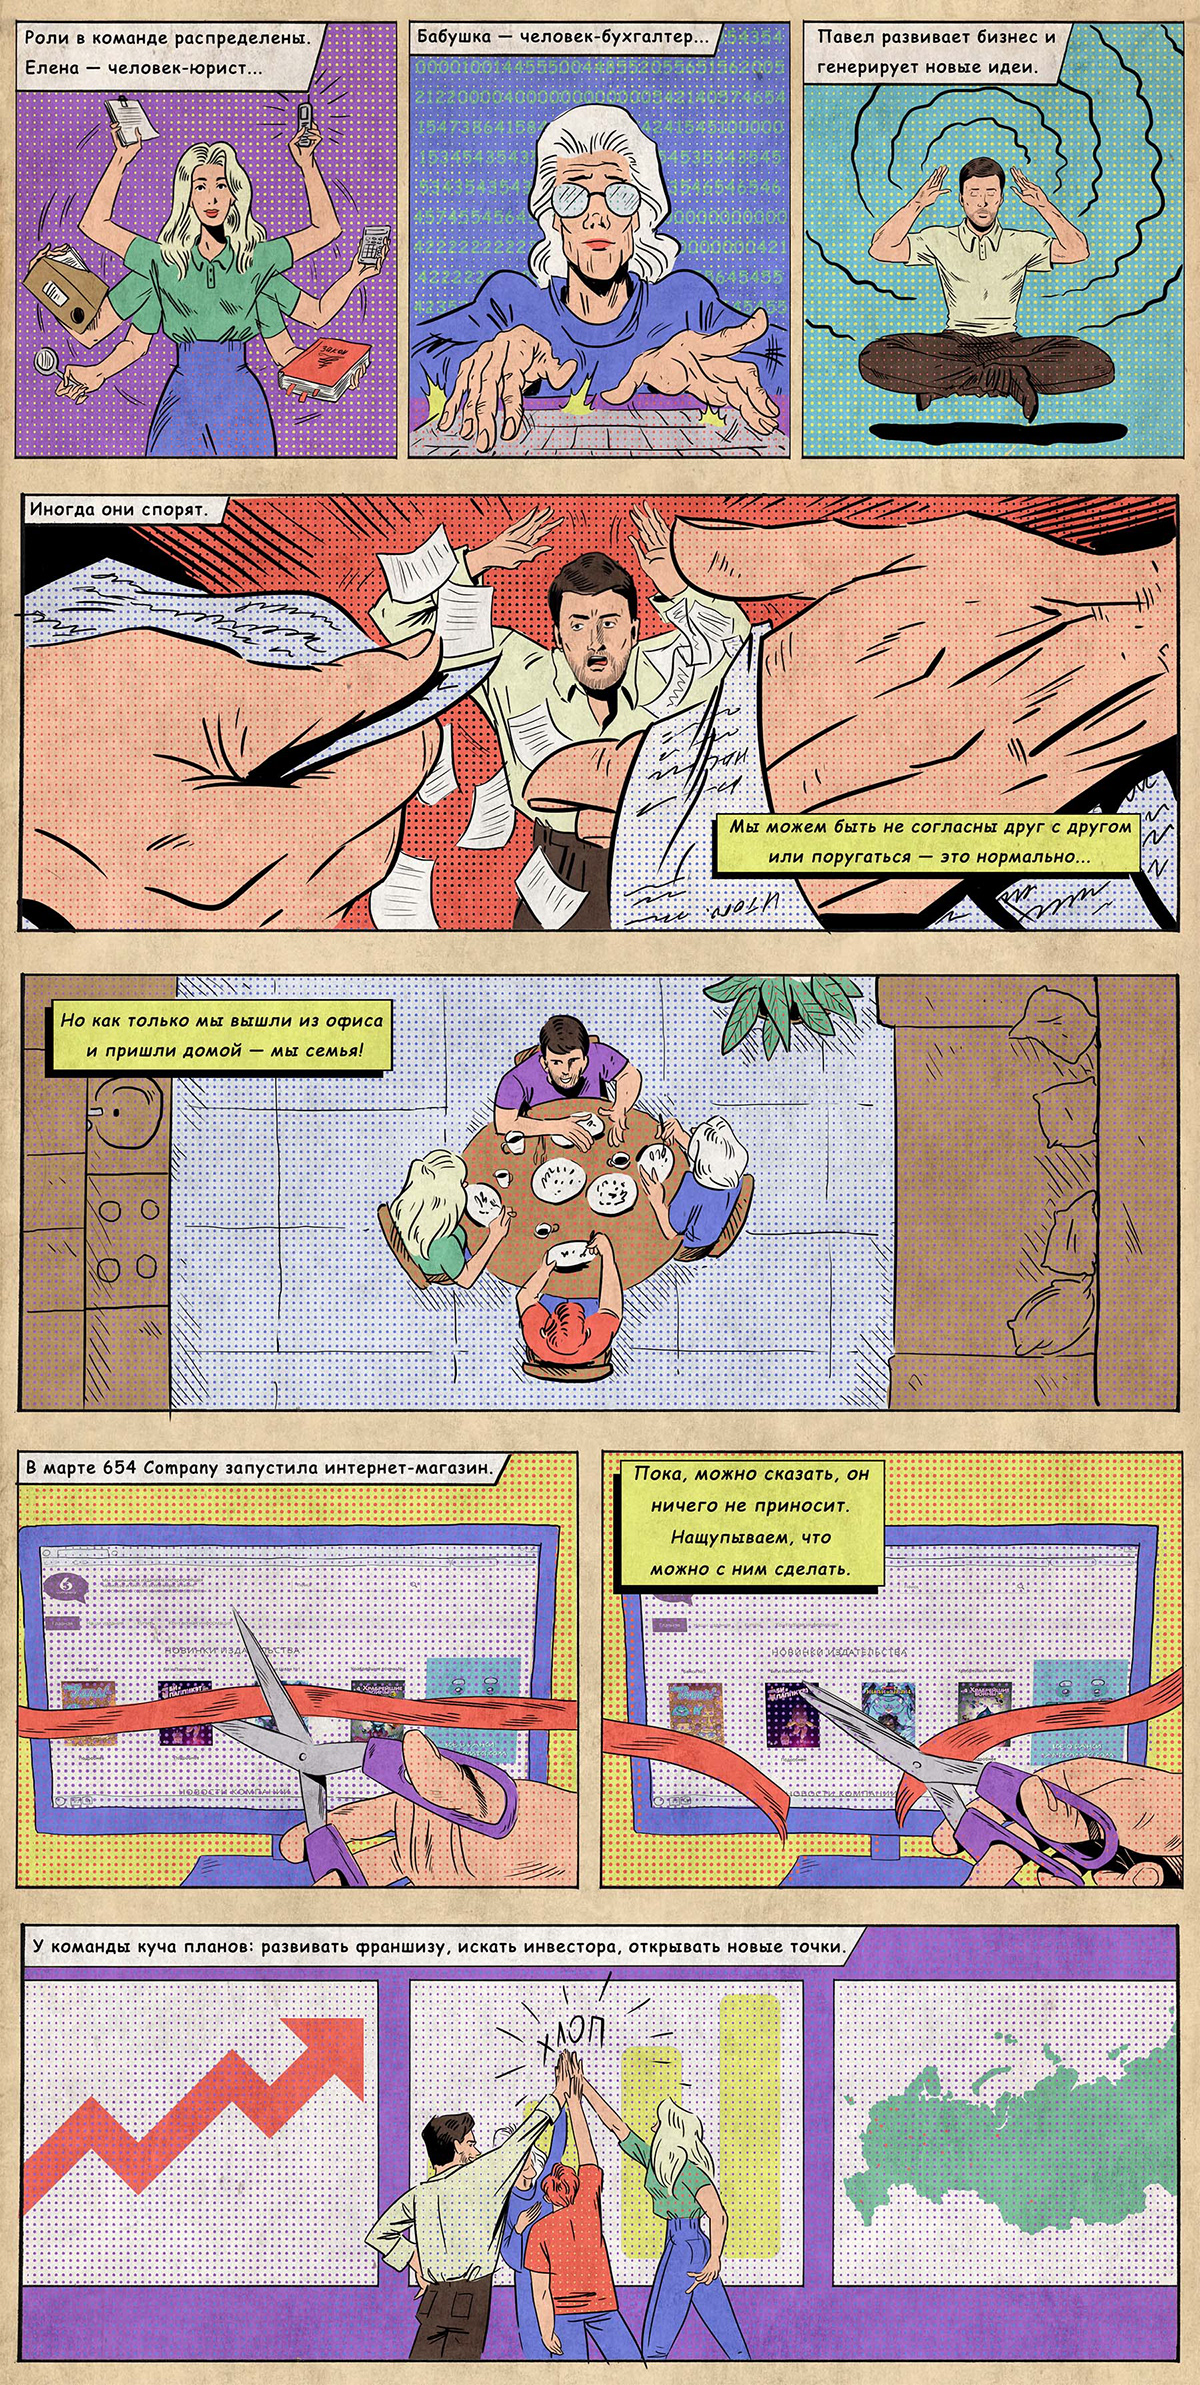 ILLUSTRATION  comics business story Editorial Illustration